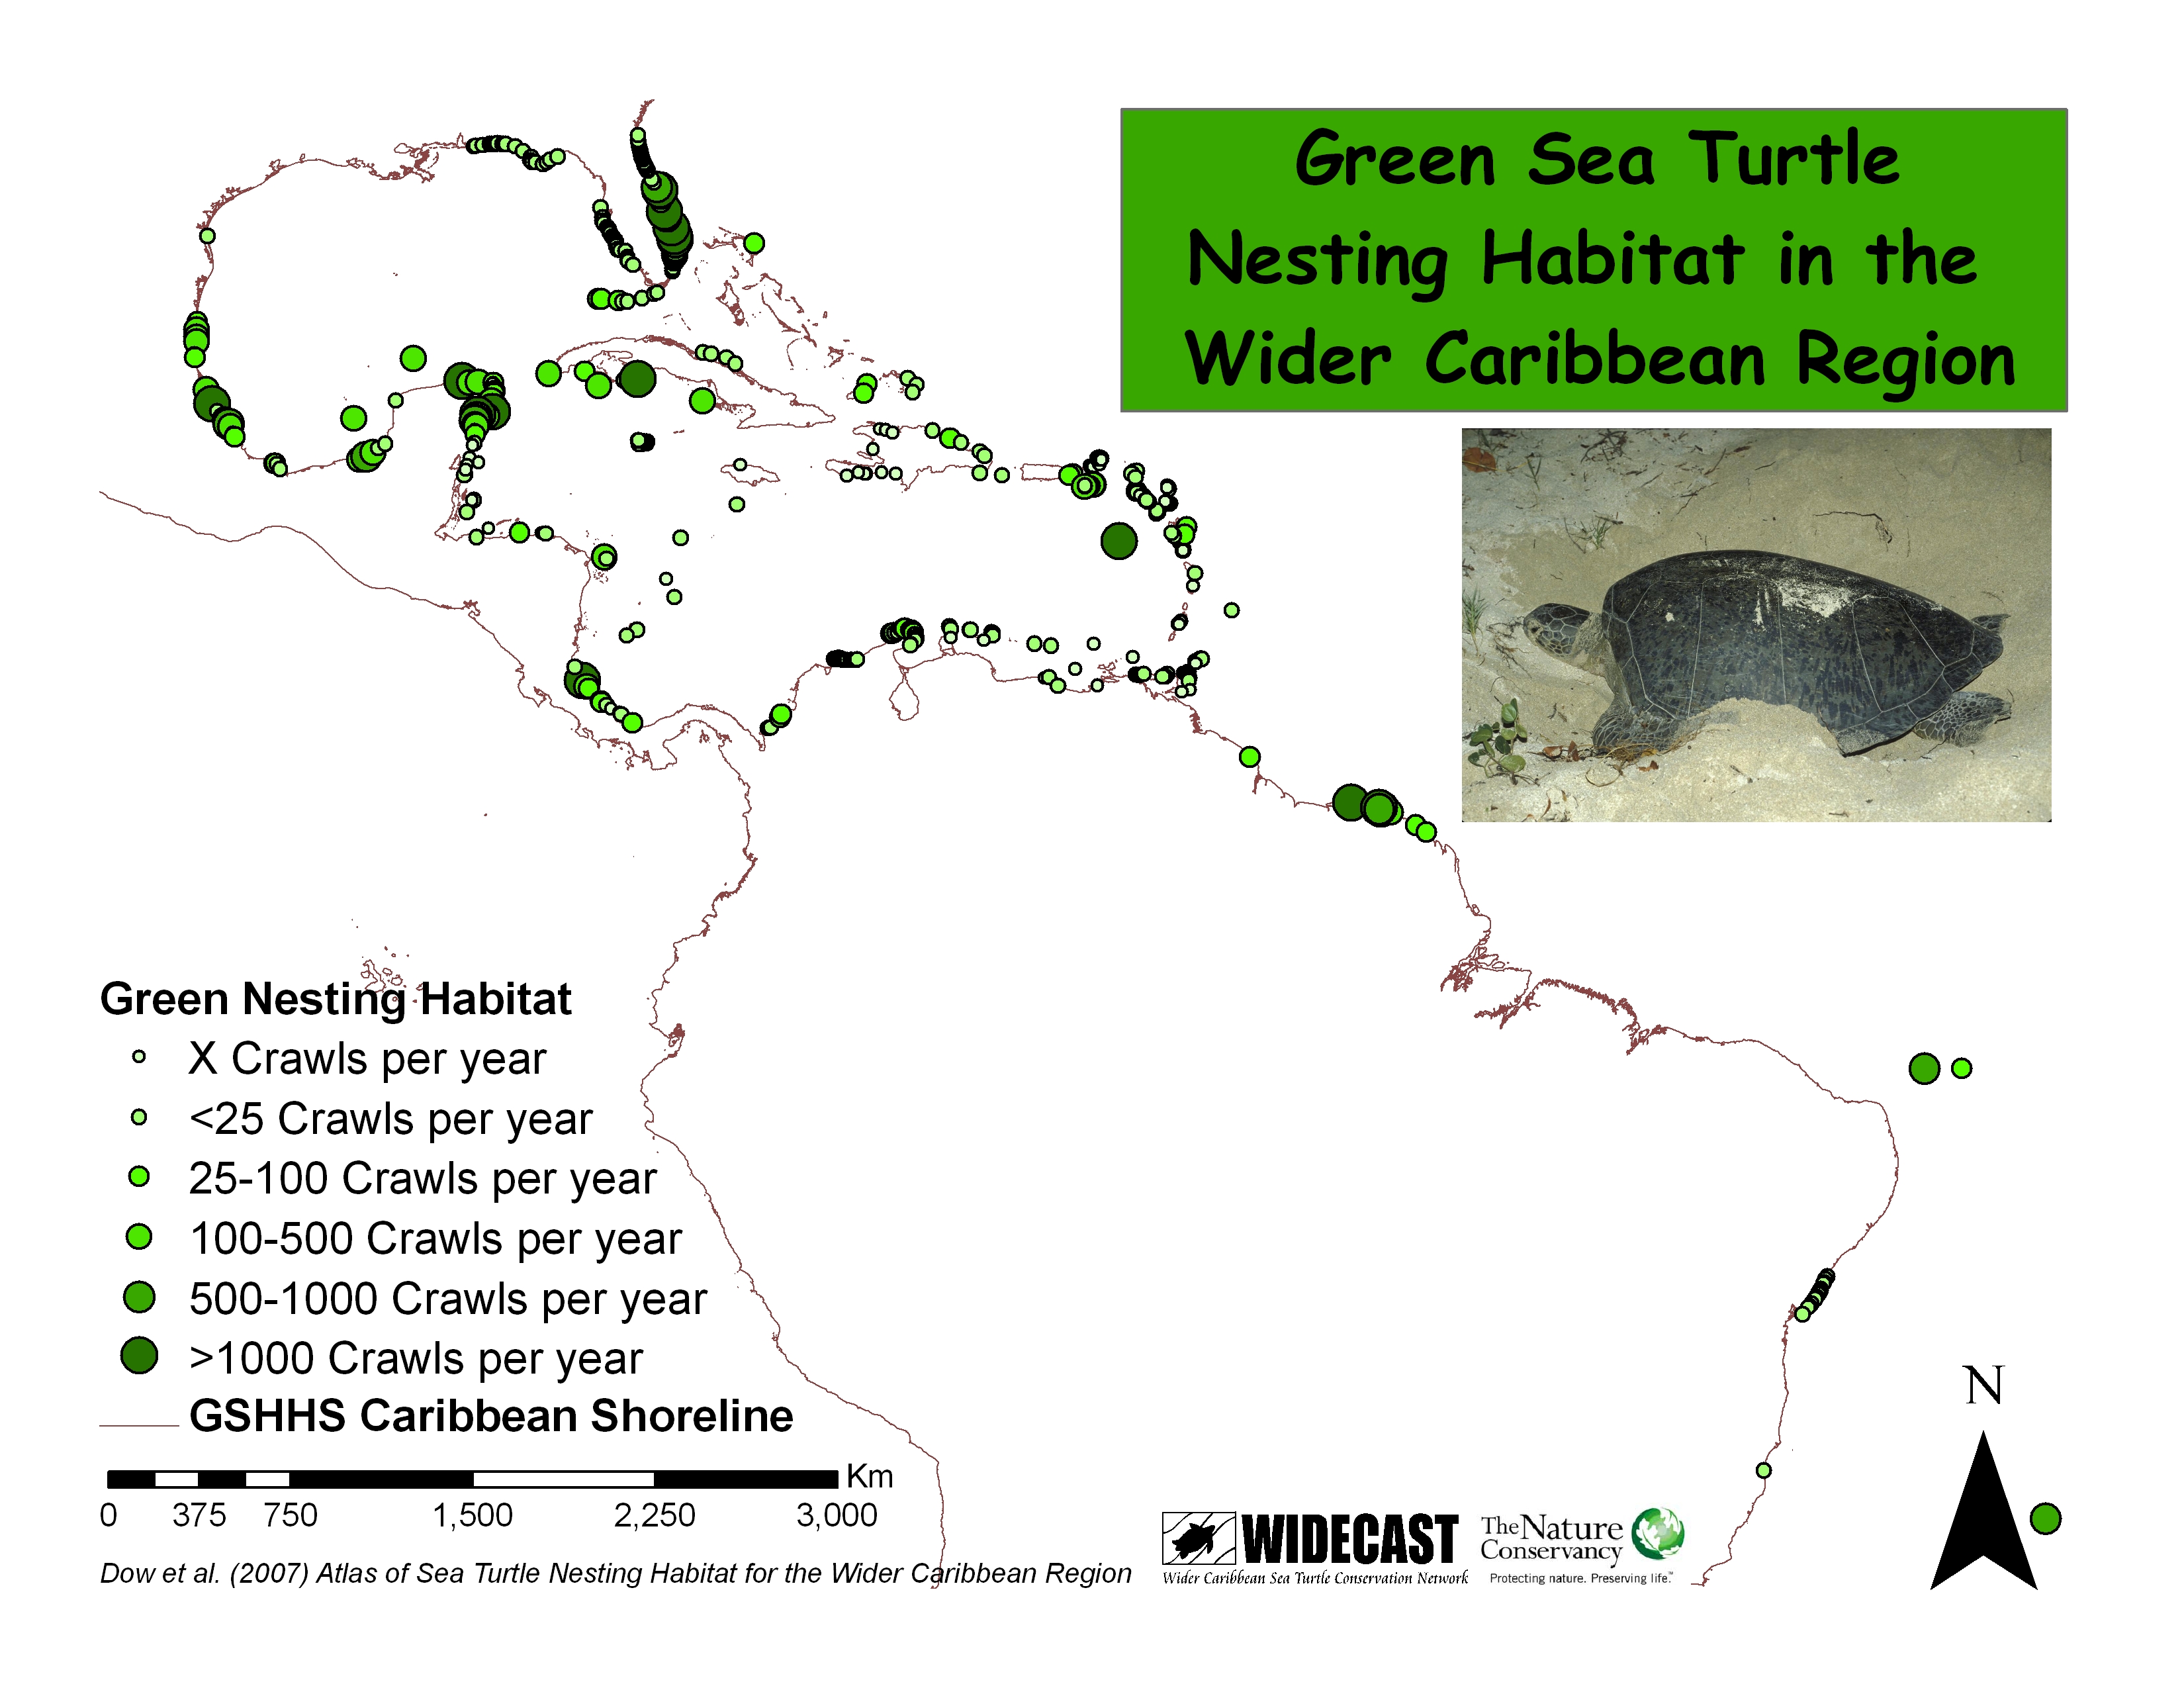 How long do green sea turtles live?